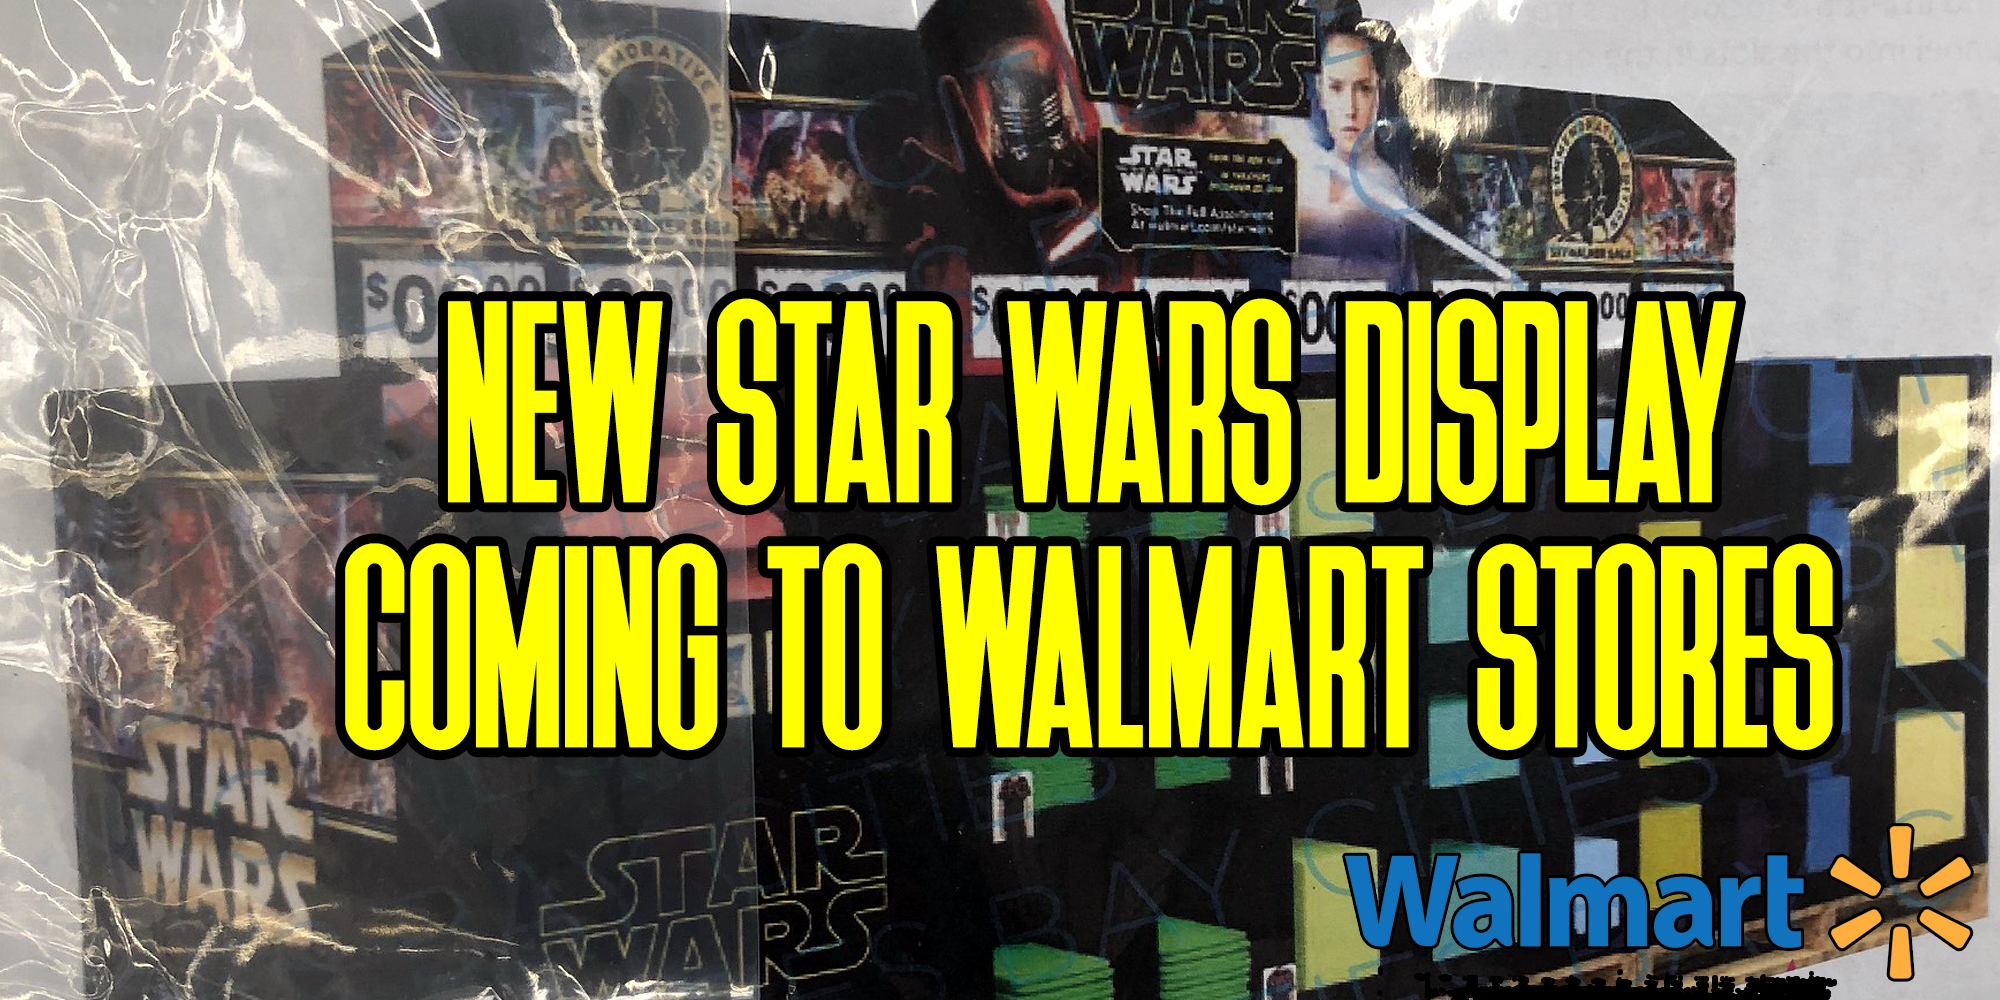 New Star Wars Display Coming To Walmart